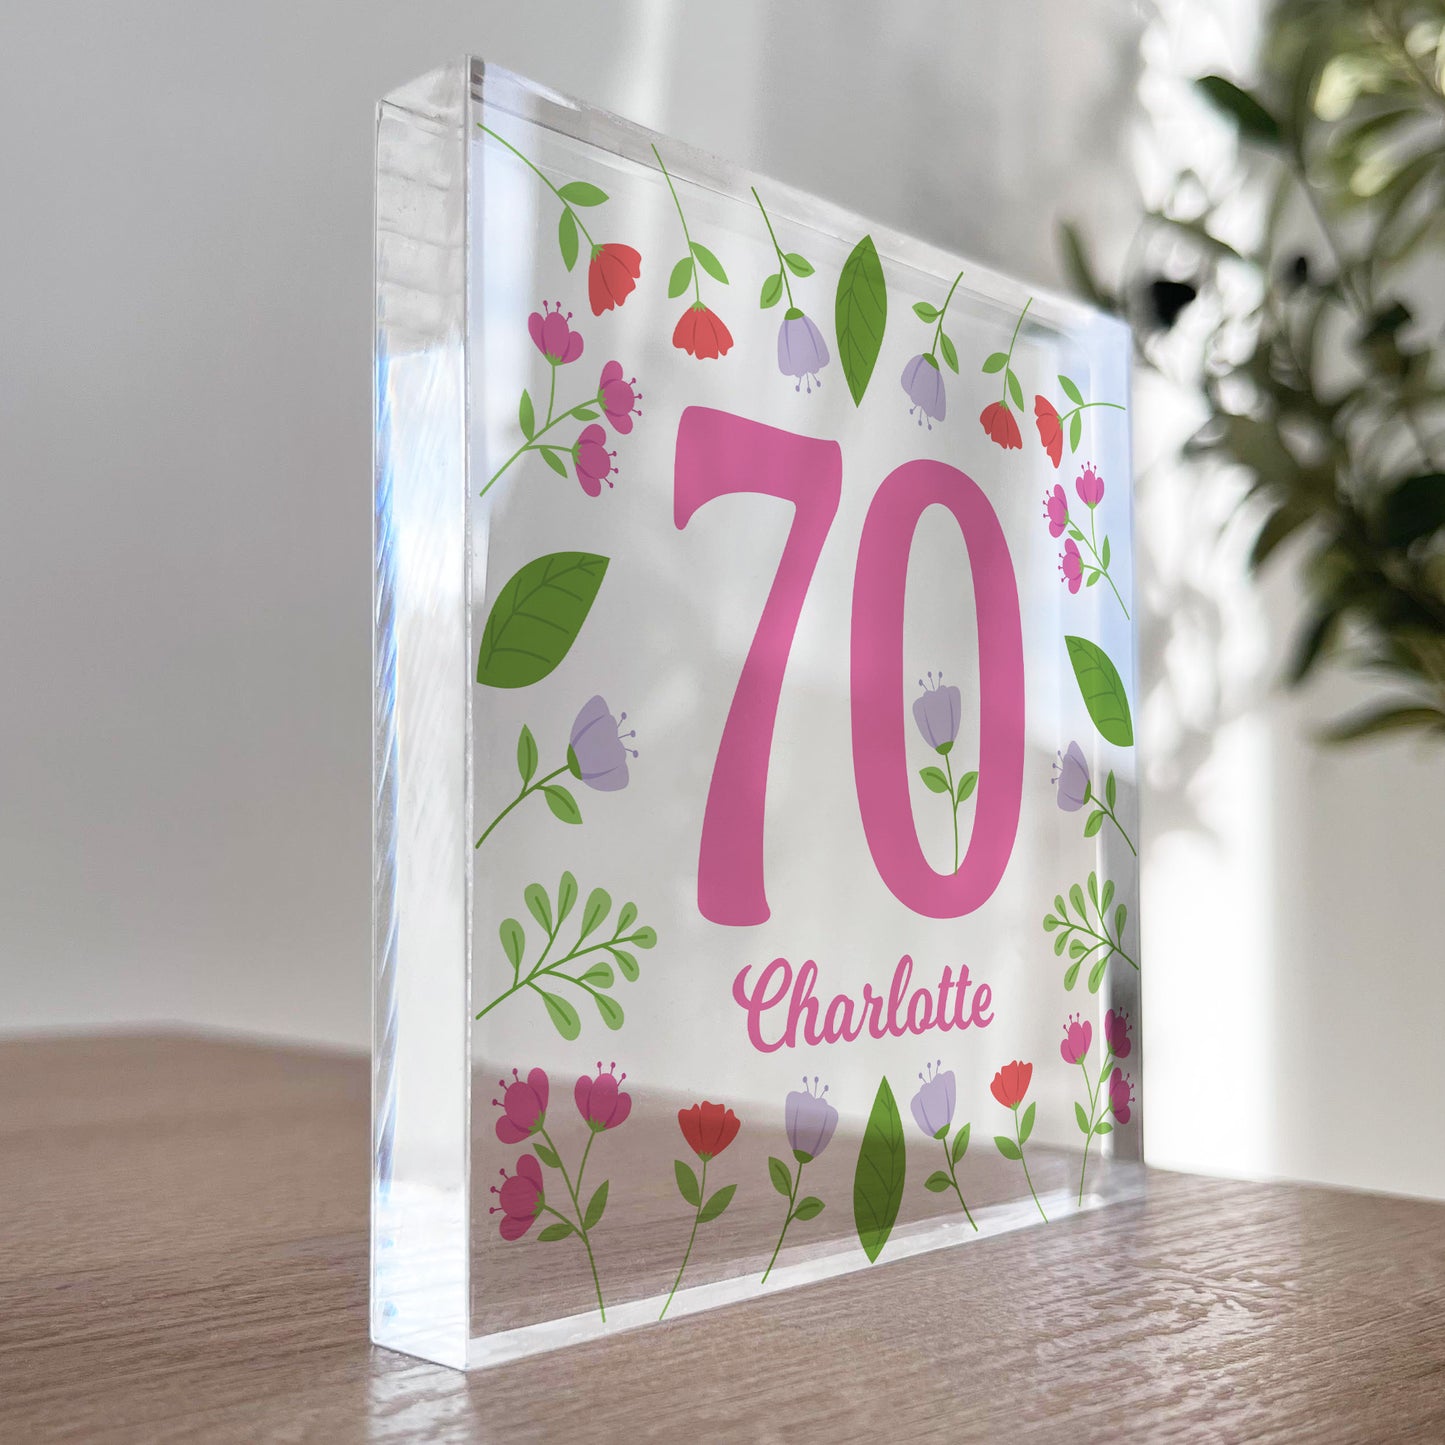 70th Birthday Gifts For Nan Mum Women Her PERSONALISED Block